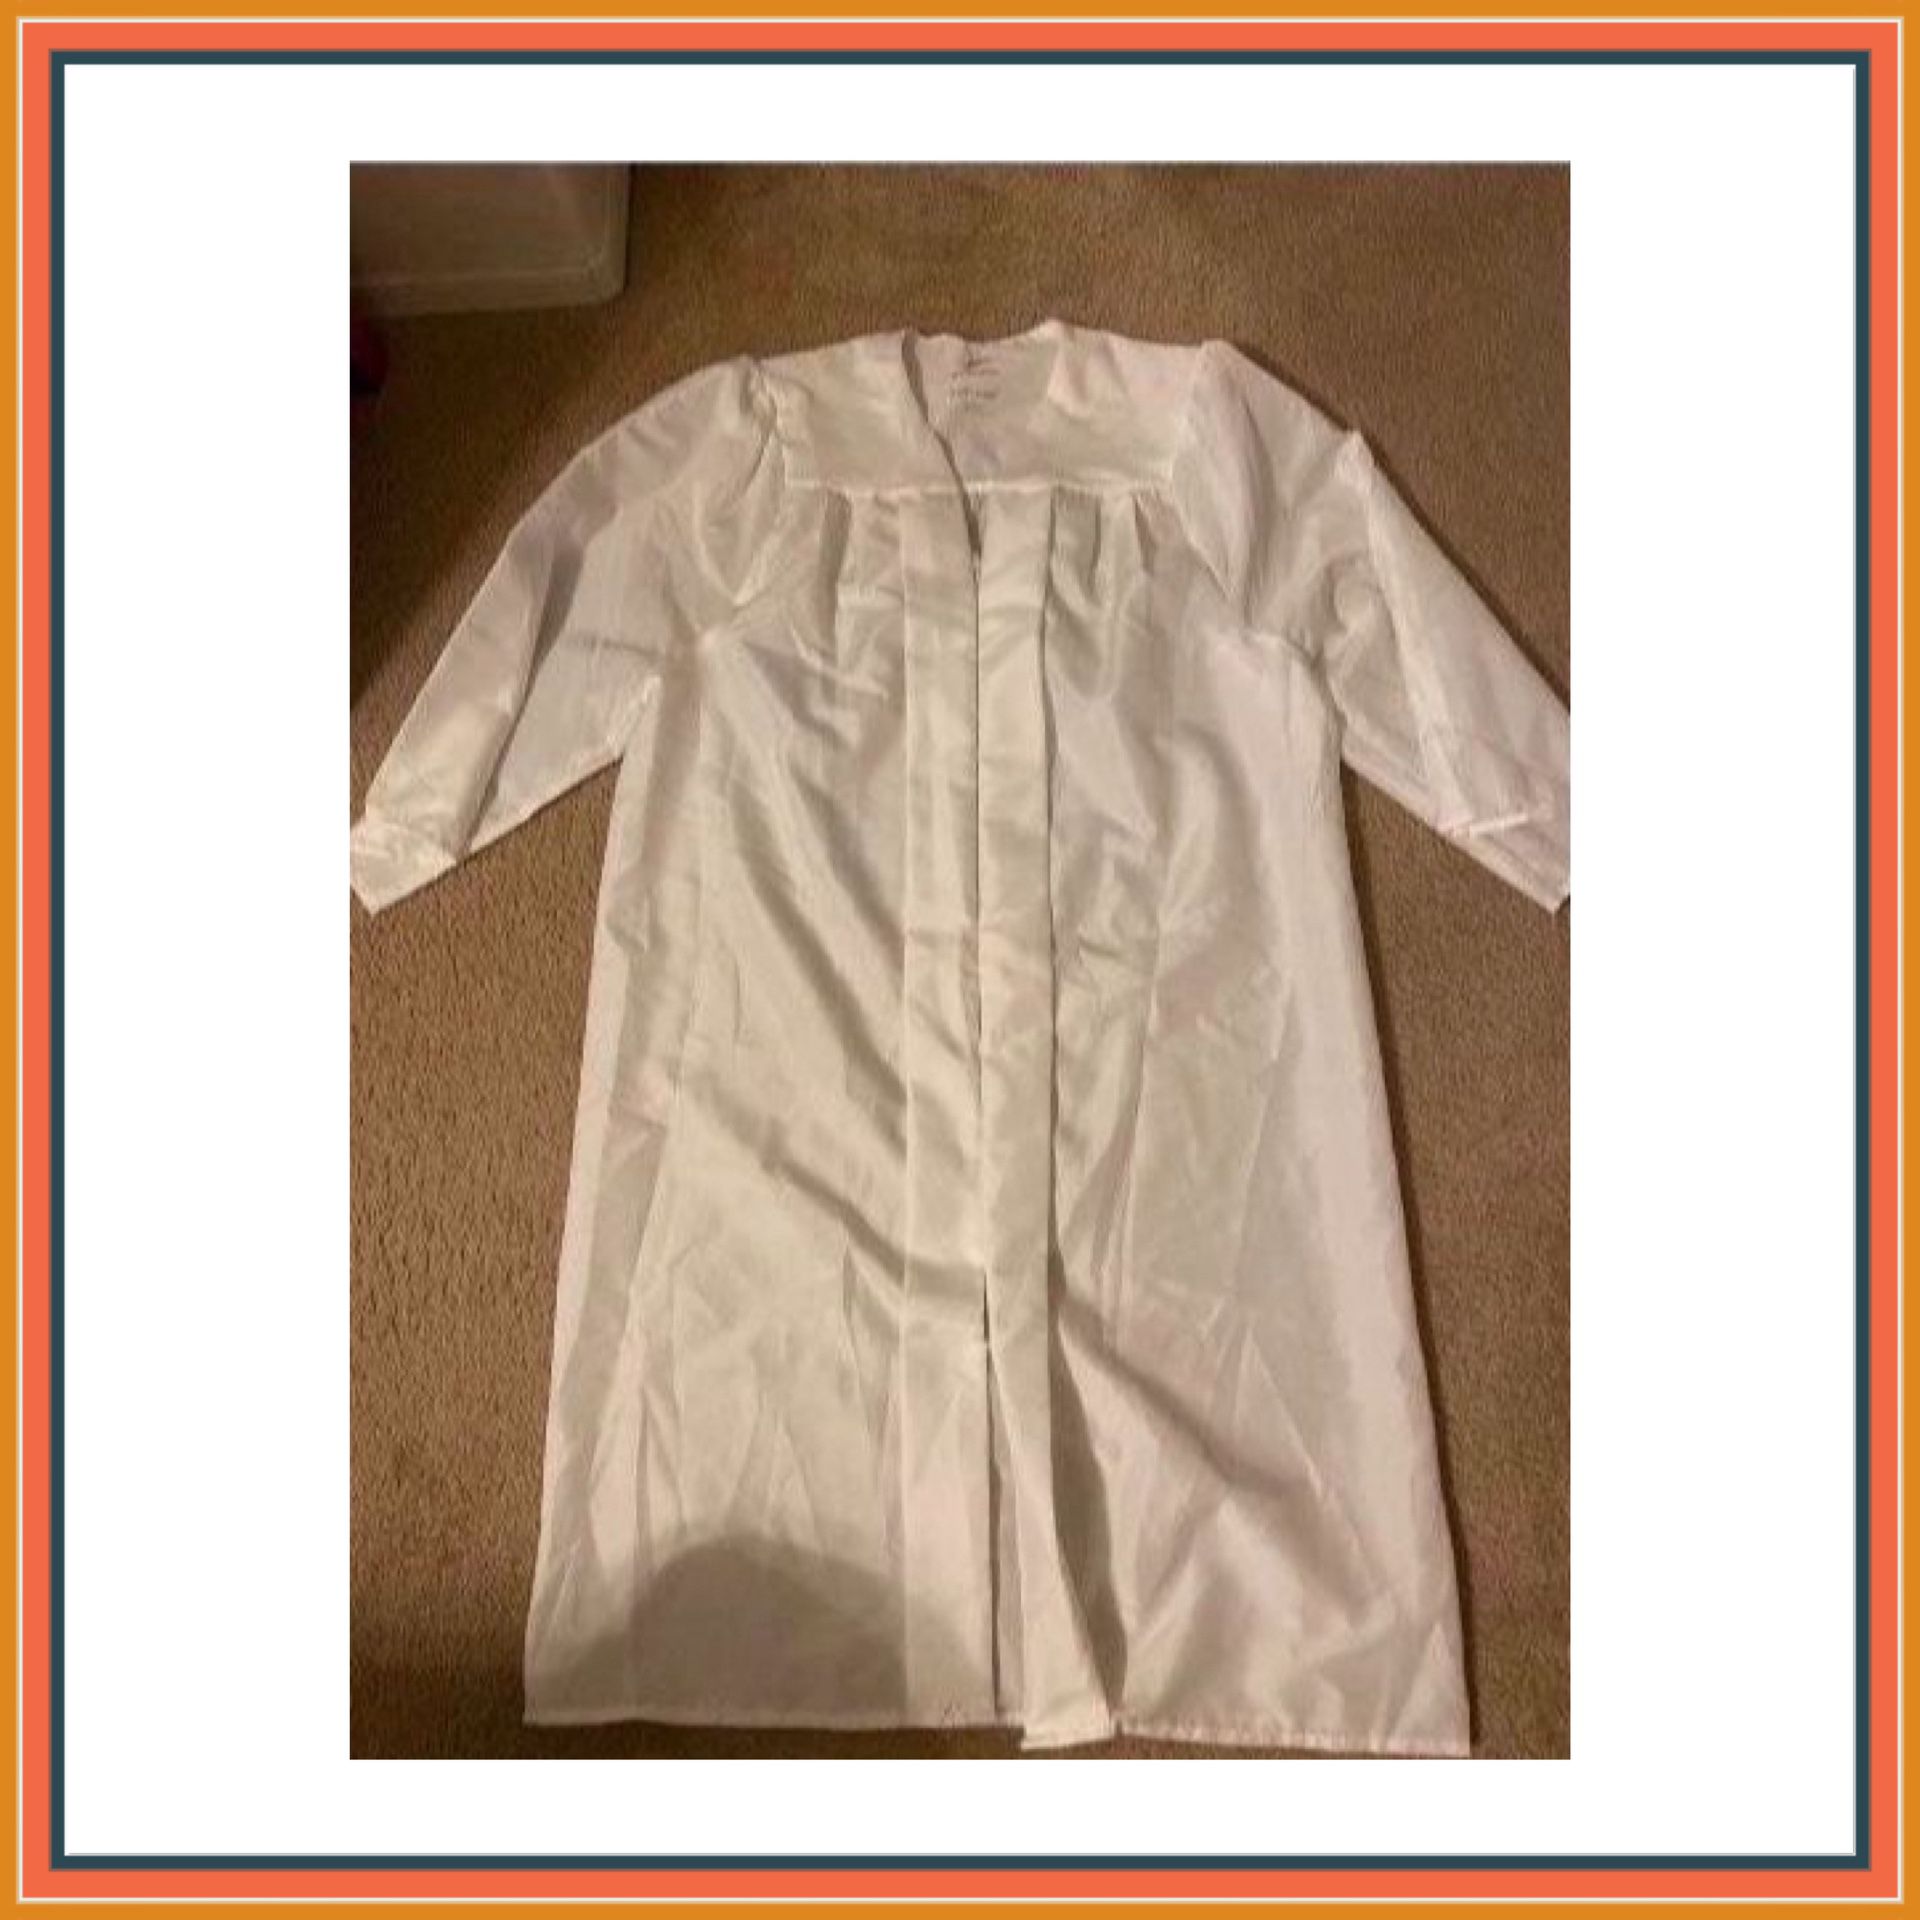 White  unisex Jostens Brand Graduation Robe  fits height 5”7-5”9  